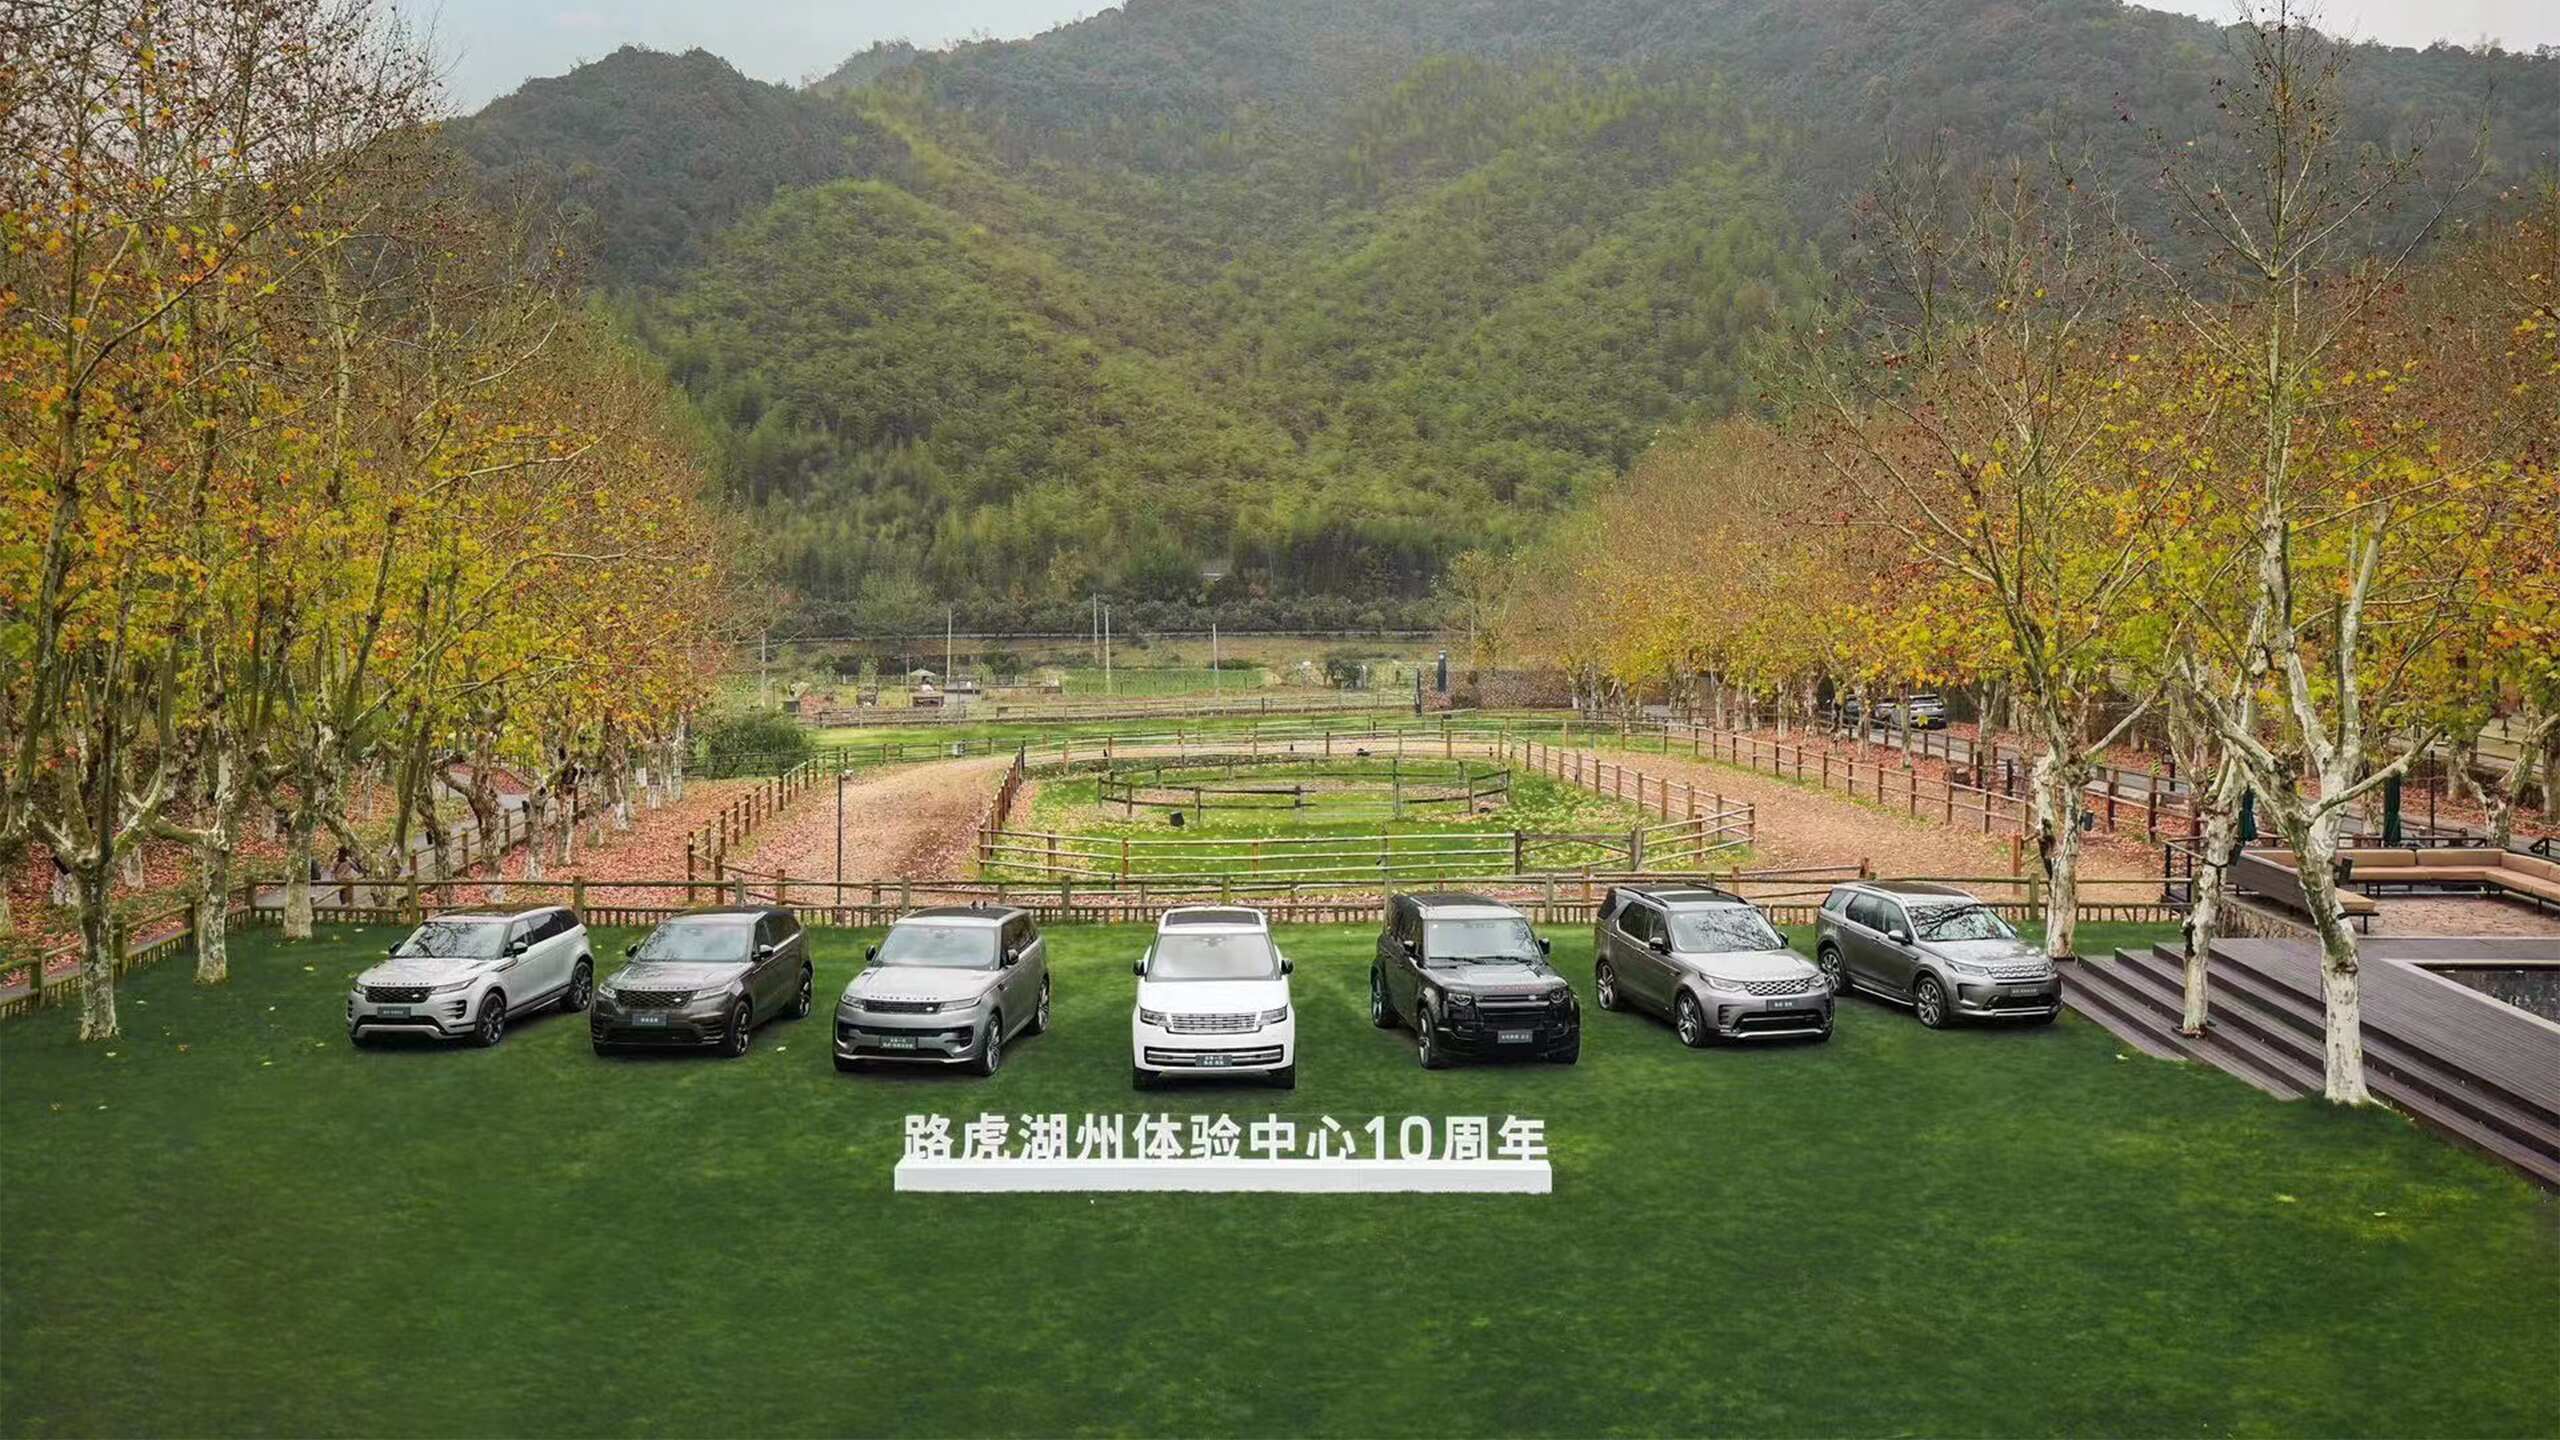 Huzhou Experience Center celebrates its 10th anniversary